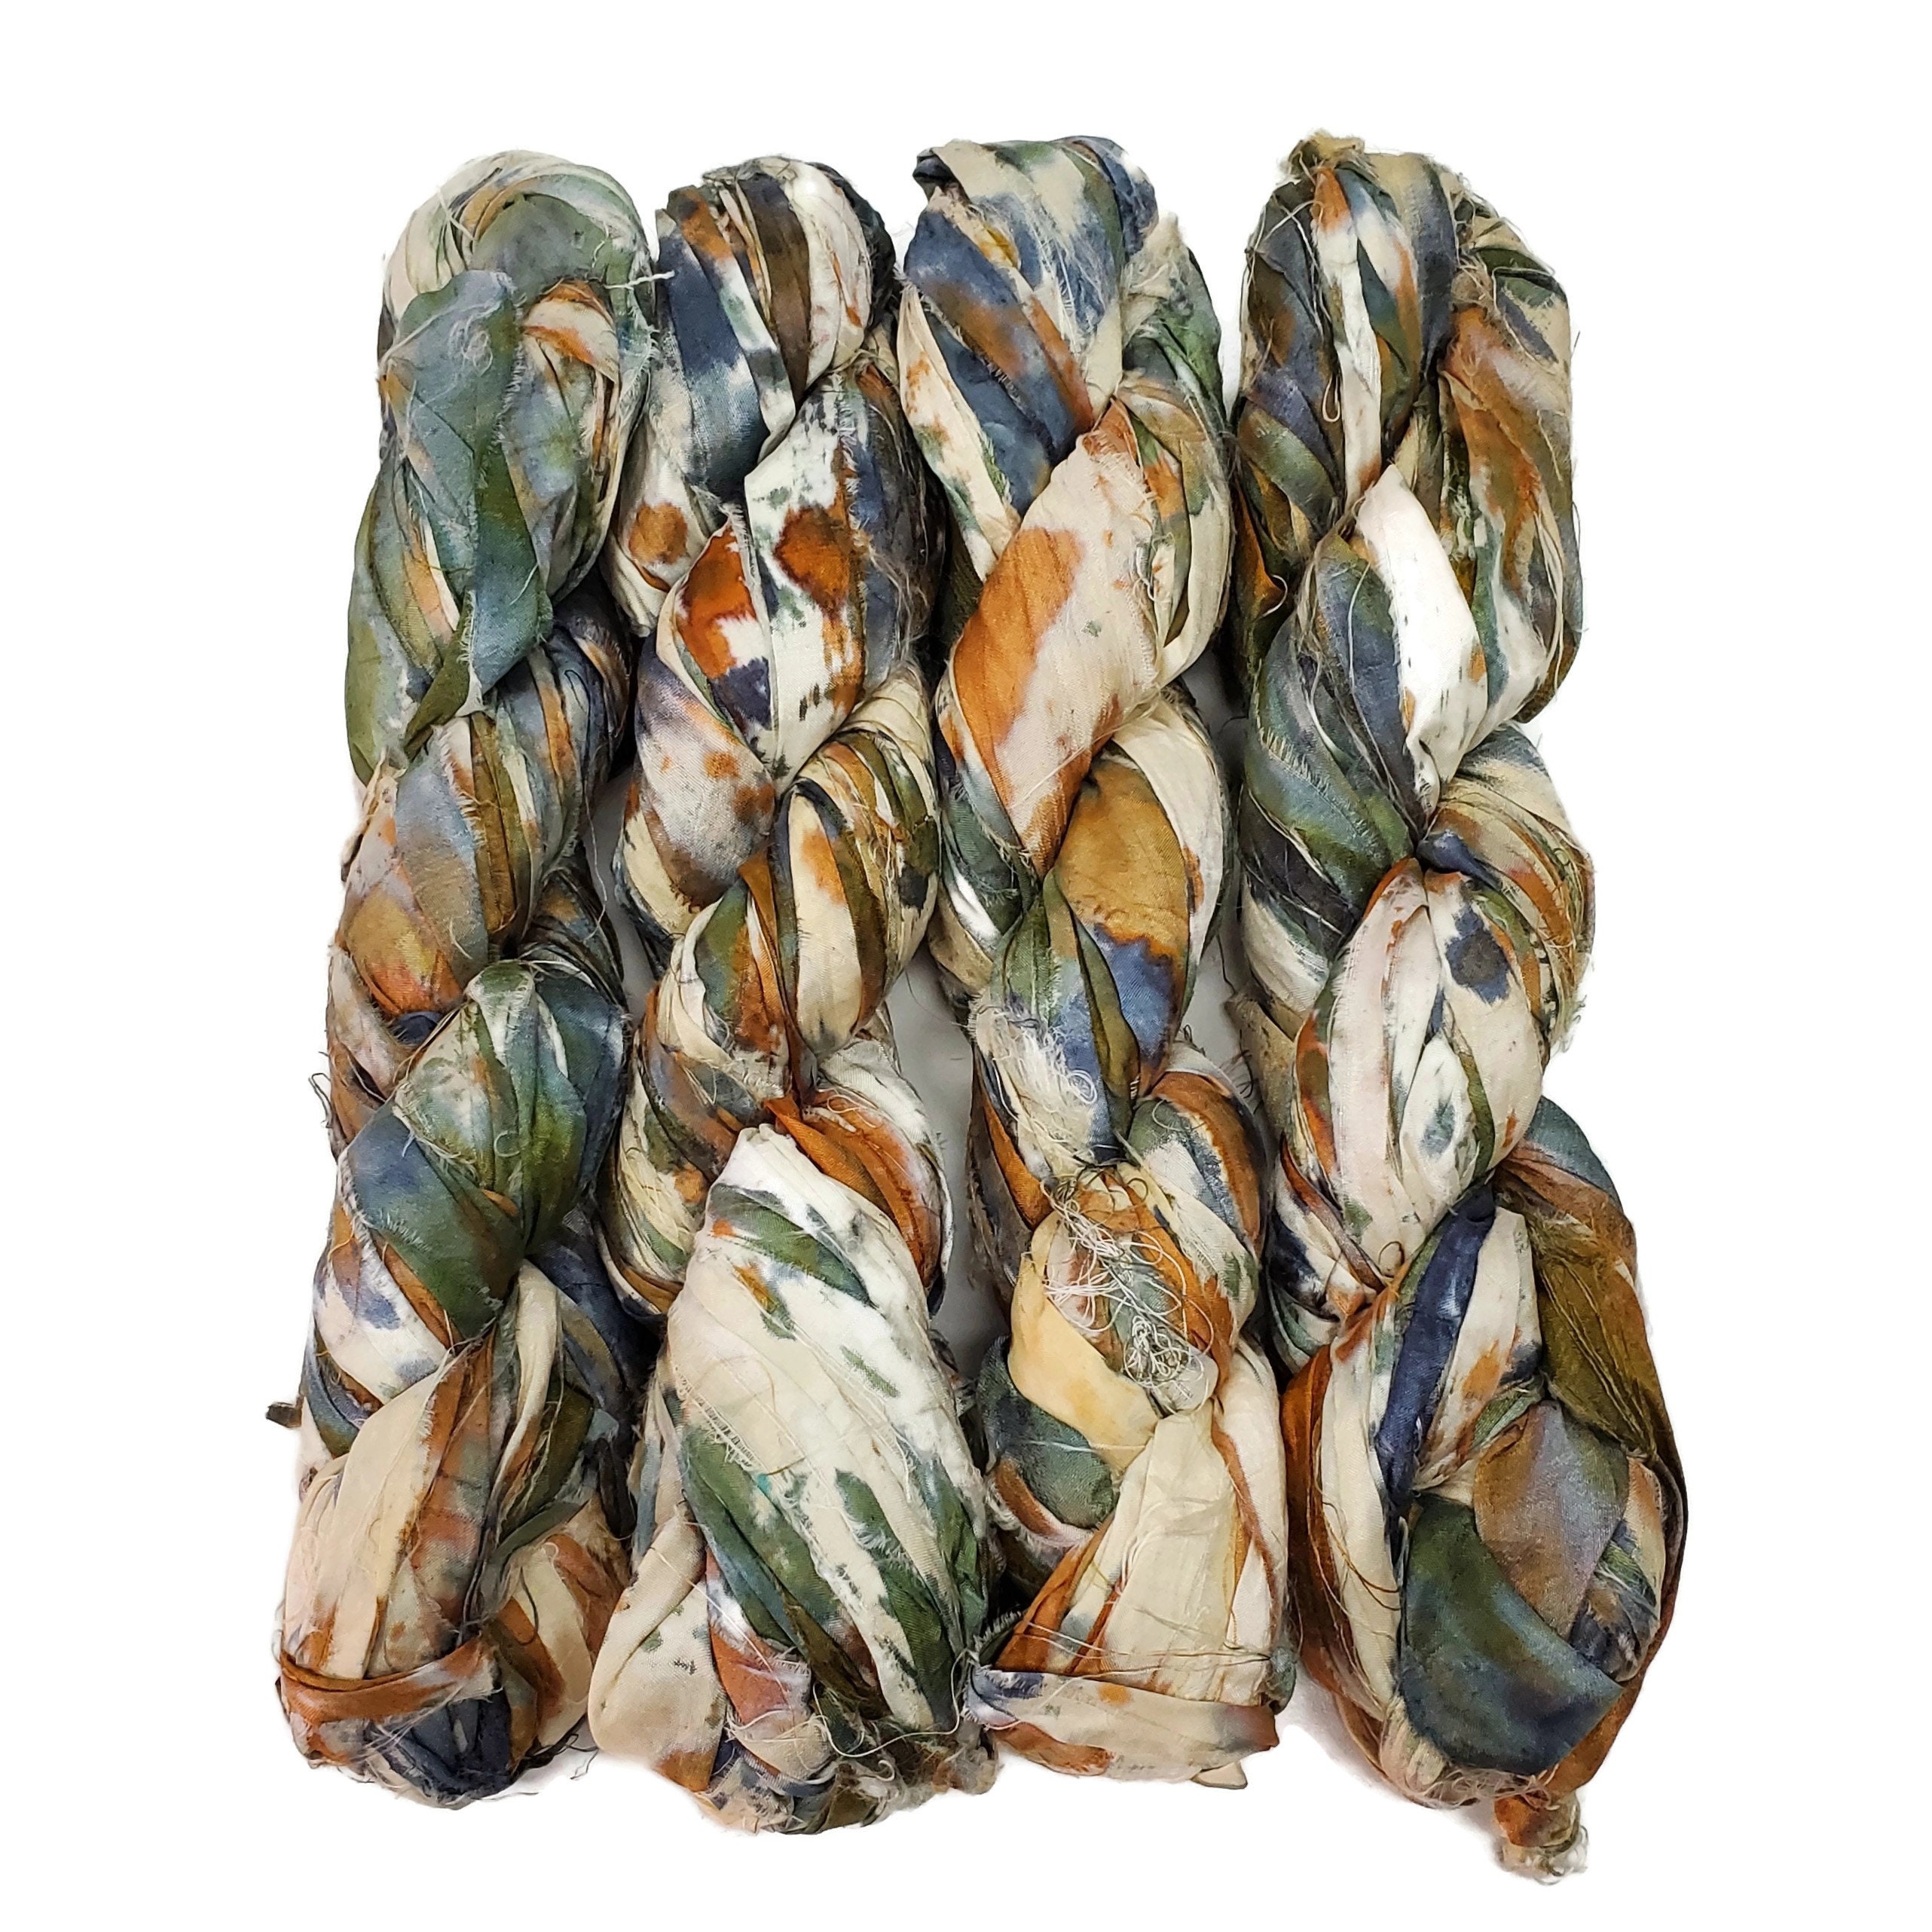 100g Recycled Sari Silk Ribbon Yarn, Jewelry Making Trim